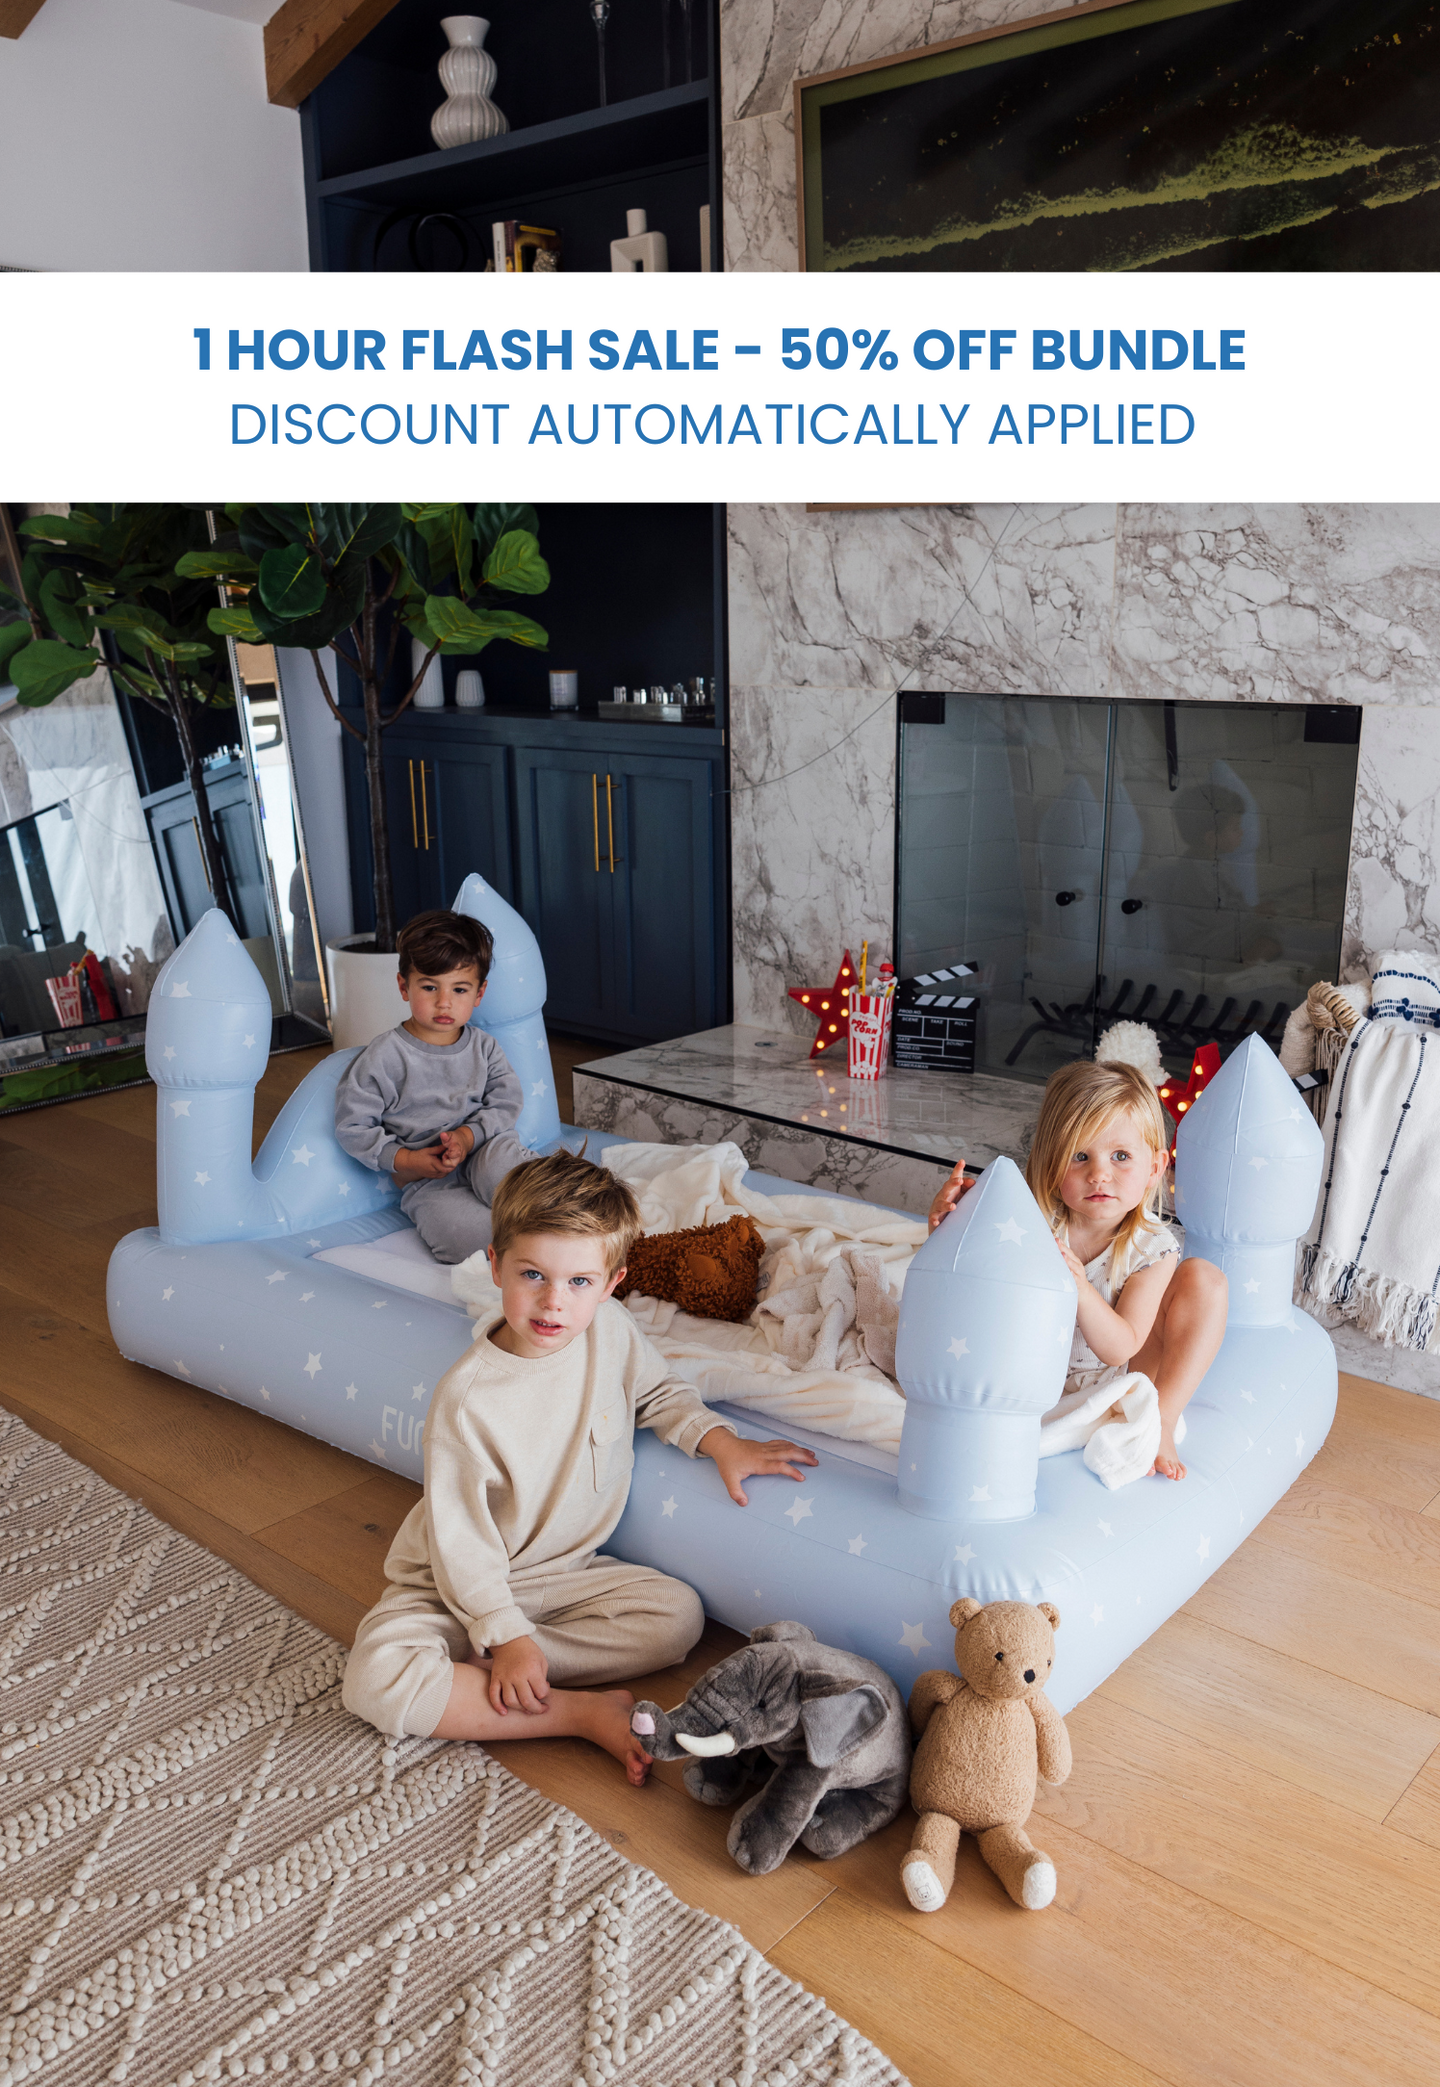 1 hour flash sale - 50% off bundle discount automatically applied